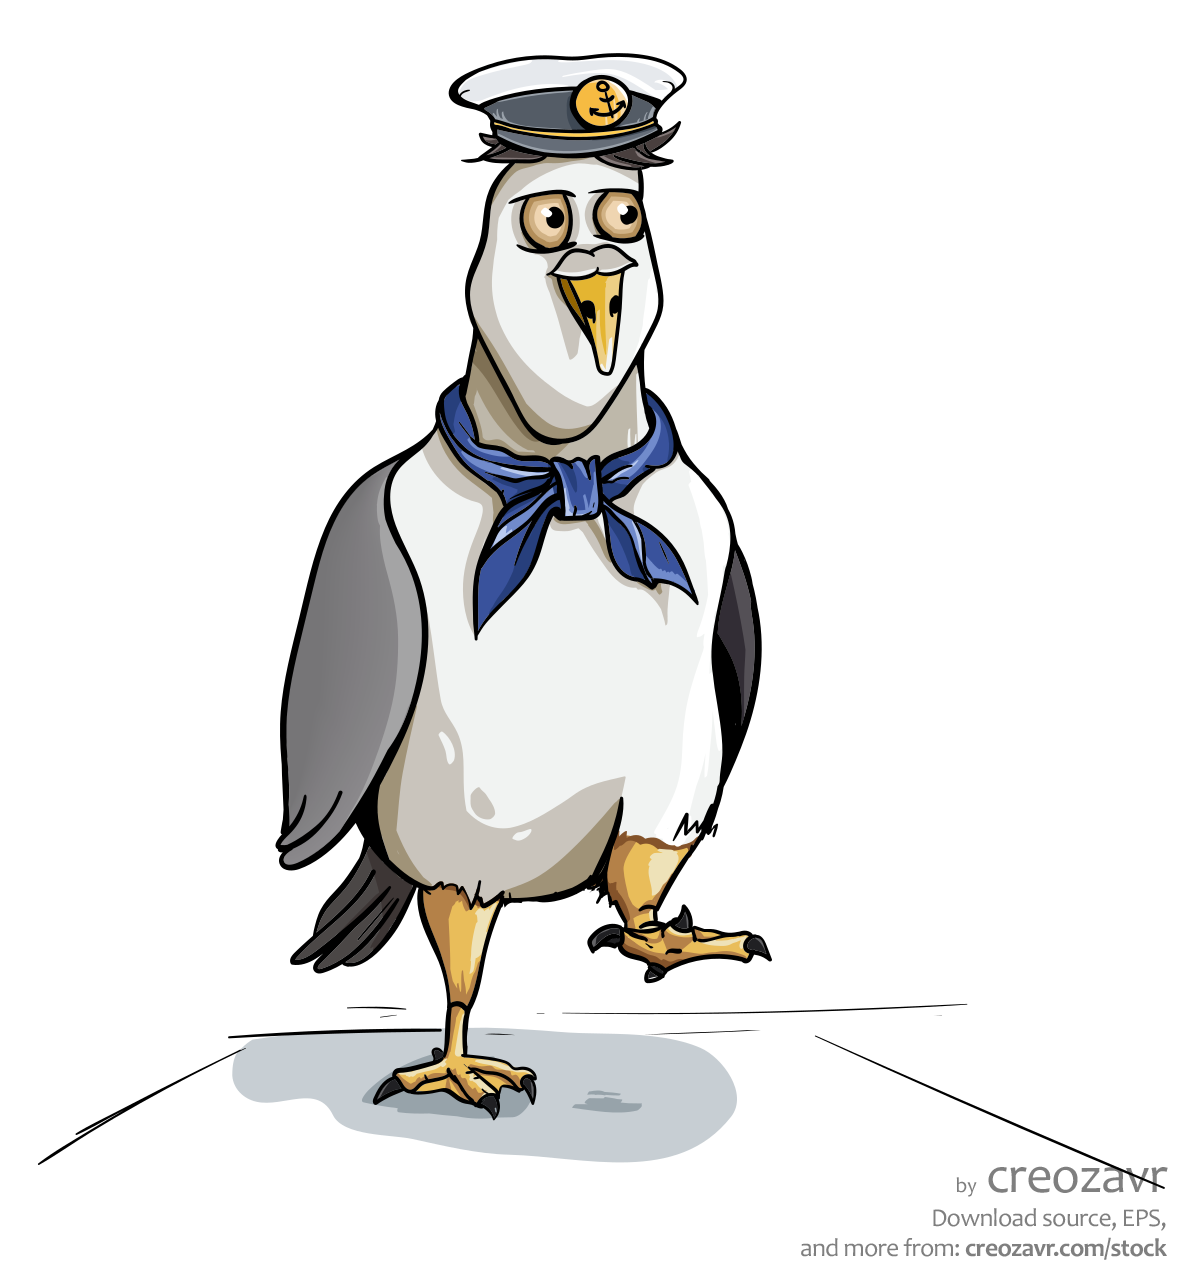 Animated seagull